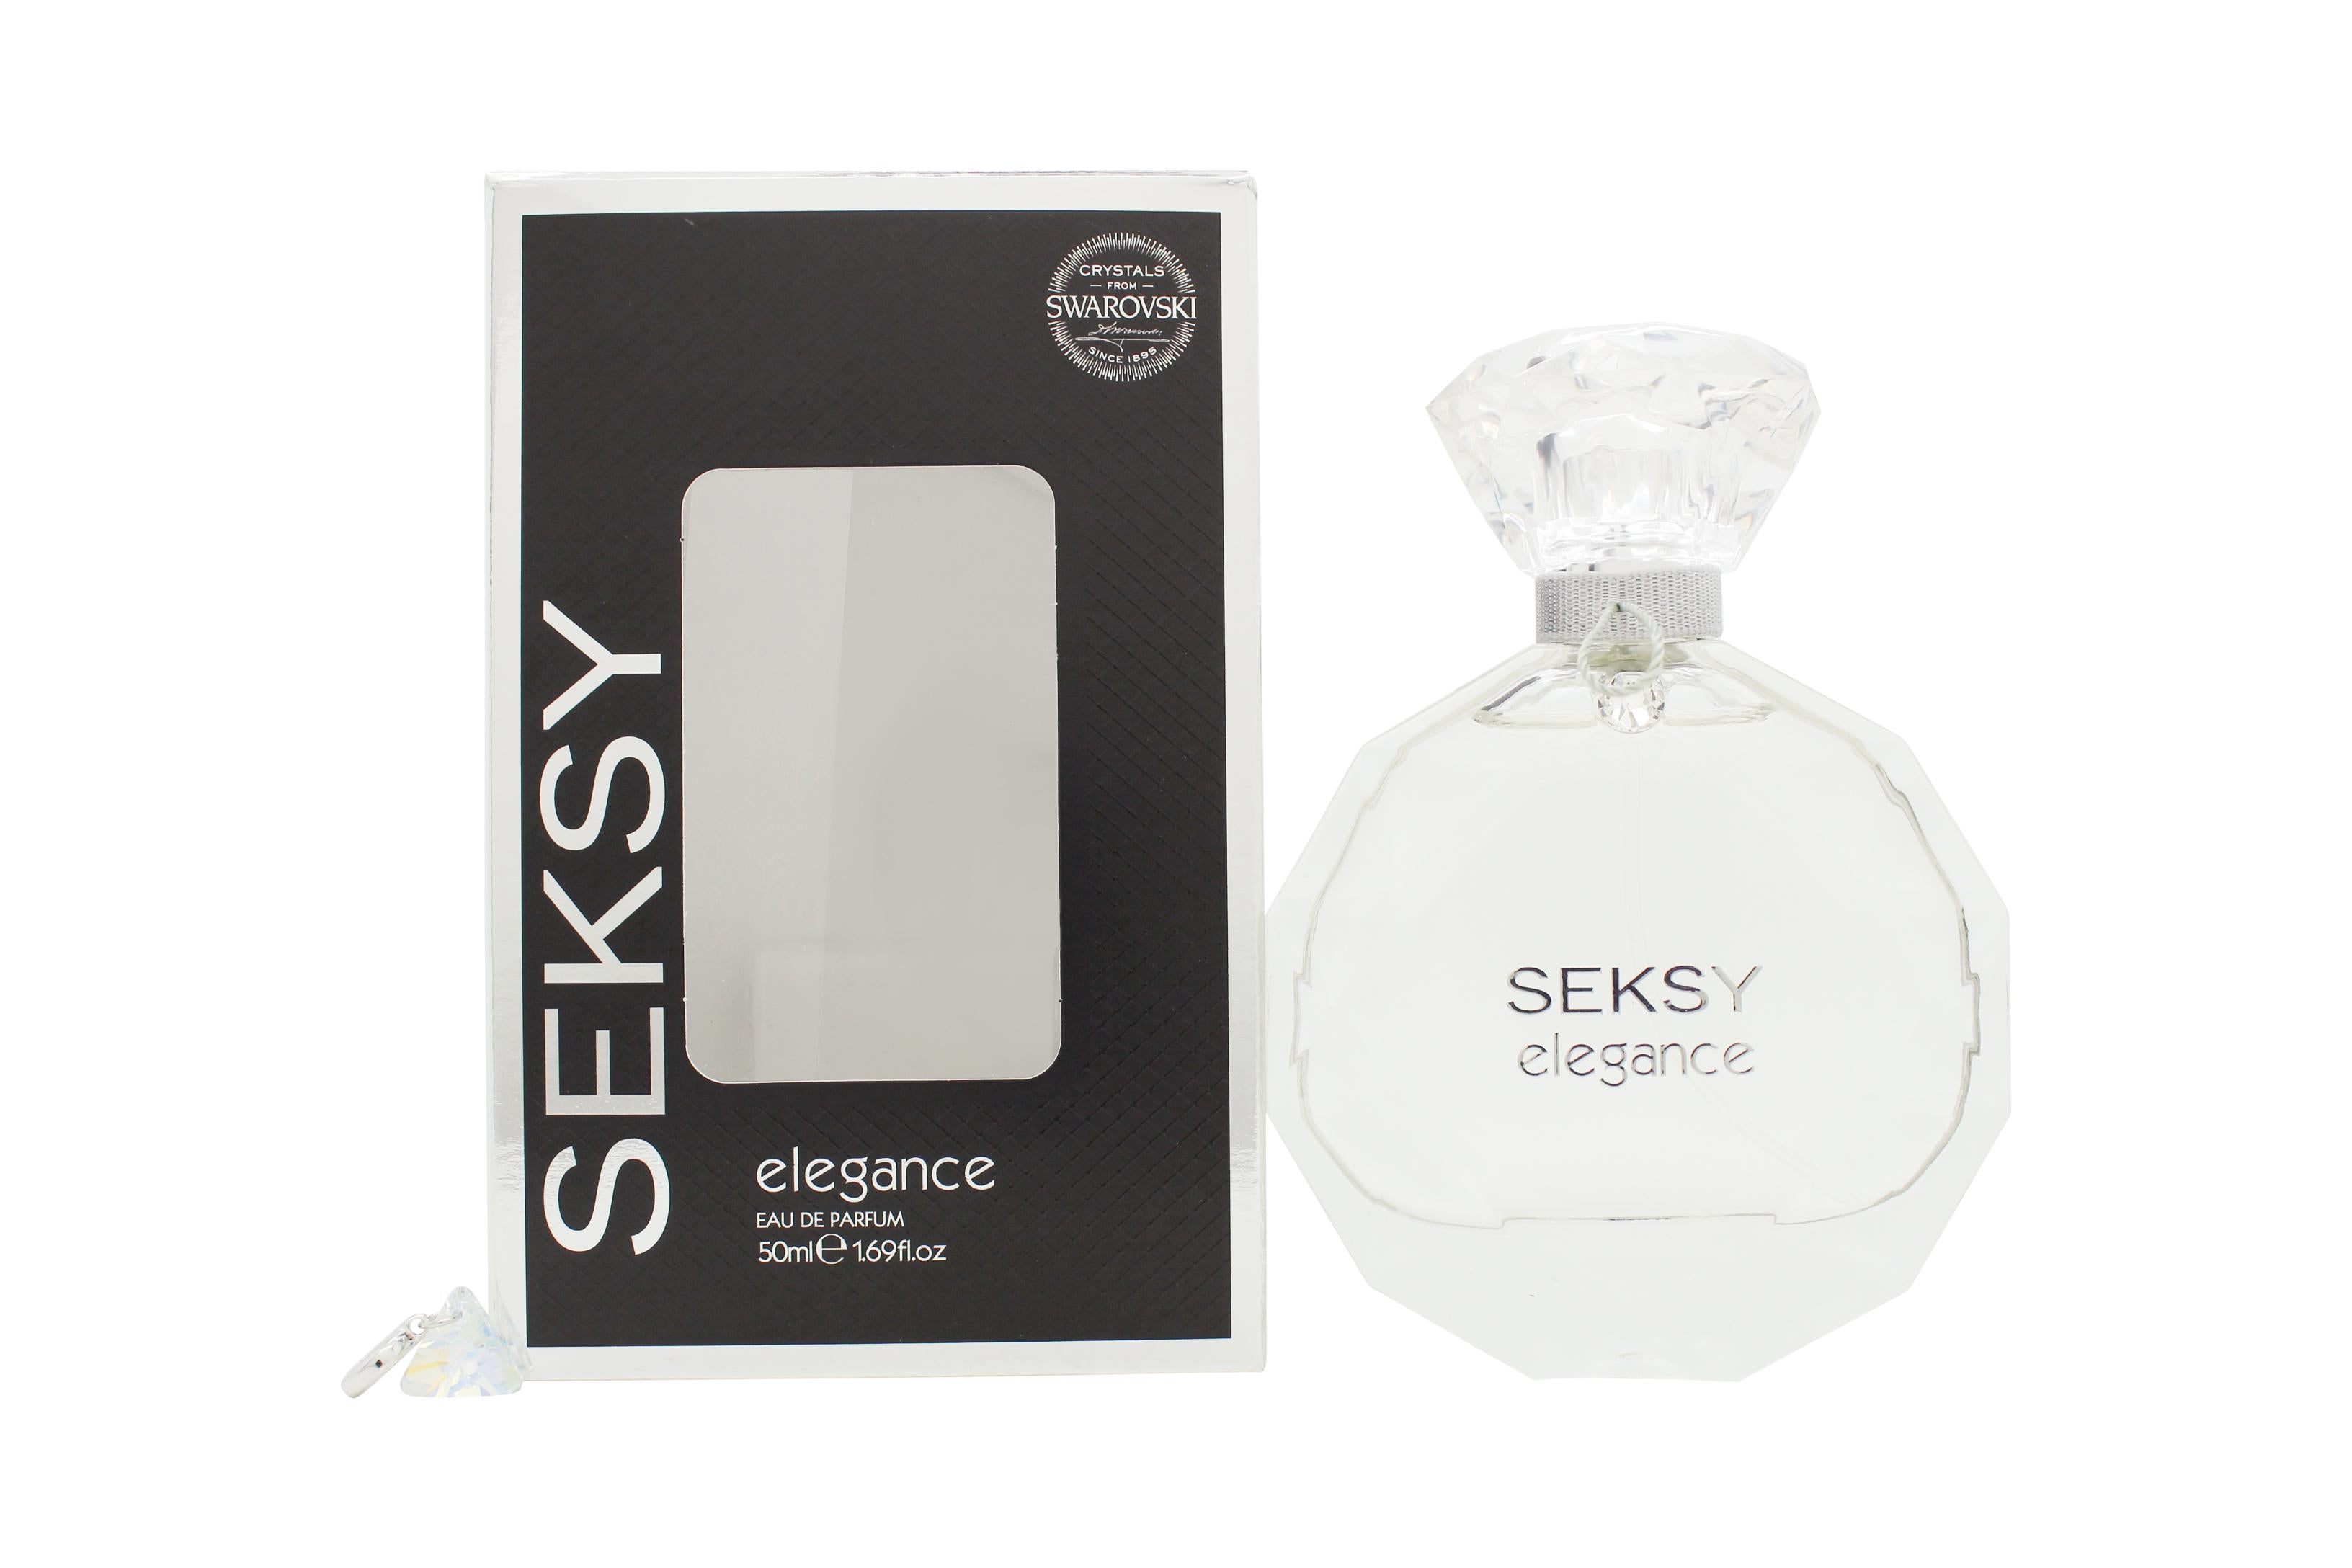 View Seksy Elegance Eau de Parfum 50ml Spray information